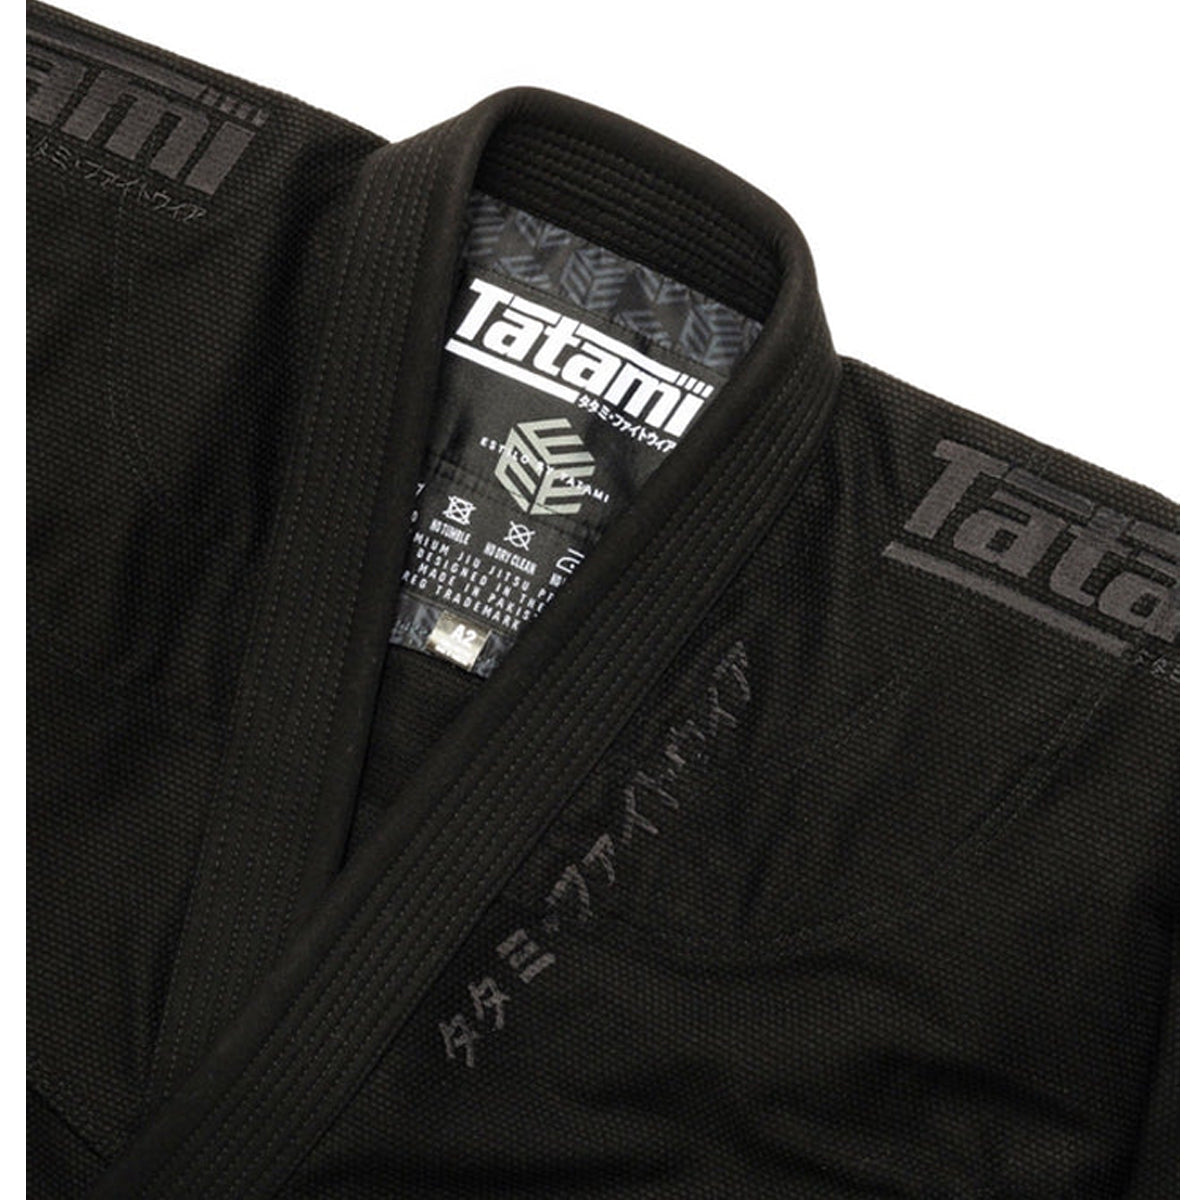 Tatami Fightwear Estilo Black Label BJJ Gi - Black/Black Tatami Fightwear